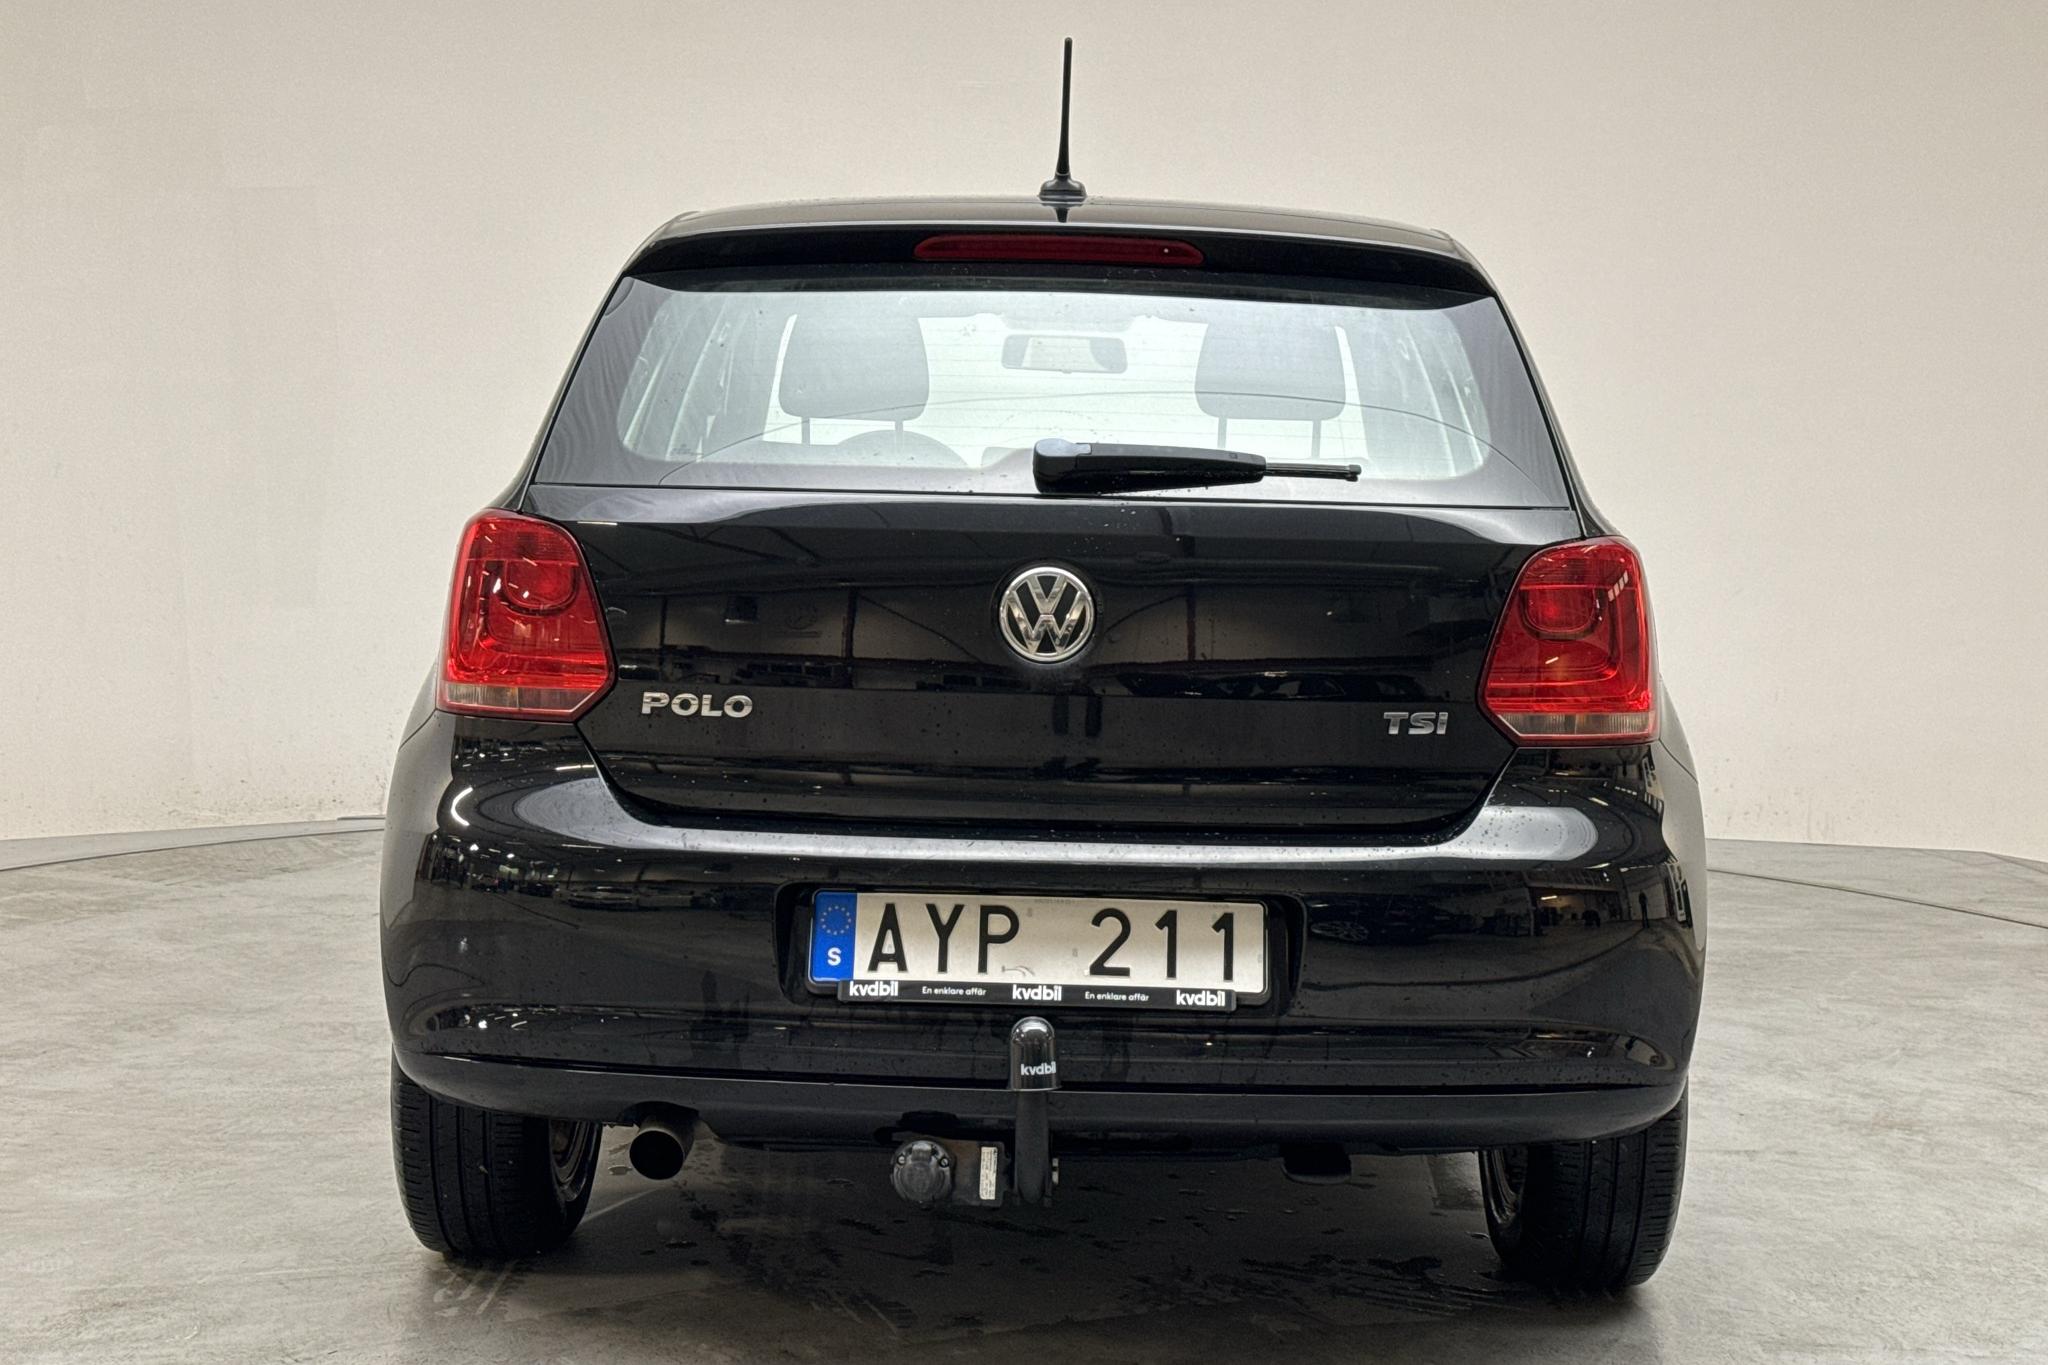 VW Polo 1.2 TSI 5dr (90hk) - 13 653 mil - Manuell - svart - 2013